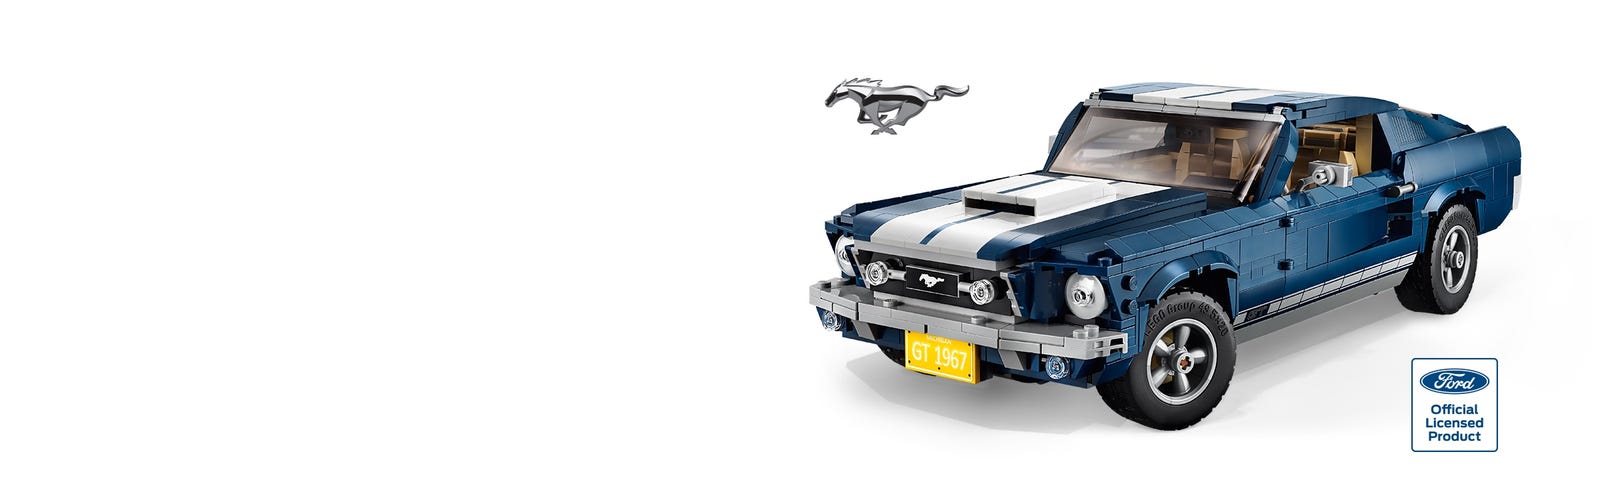 LEGO 10265 Creator Expert Ford Mustang — Brick-a-brac-uk